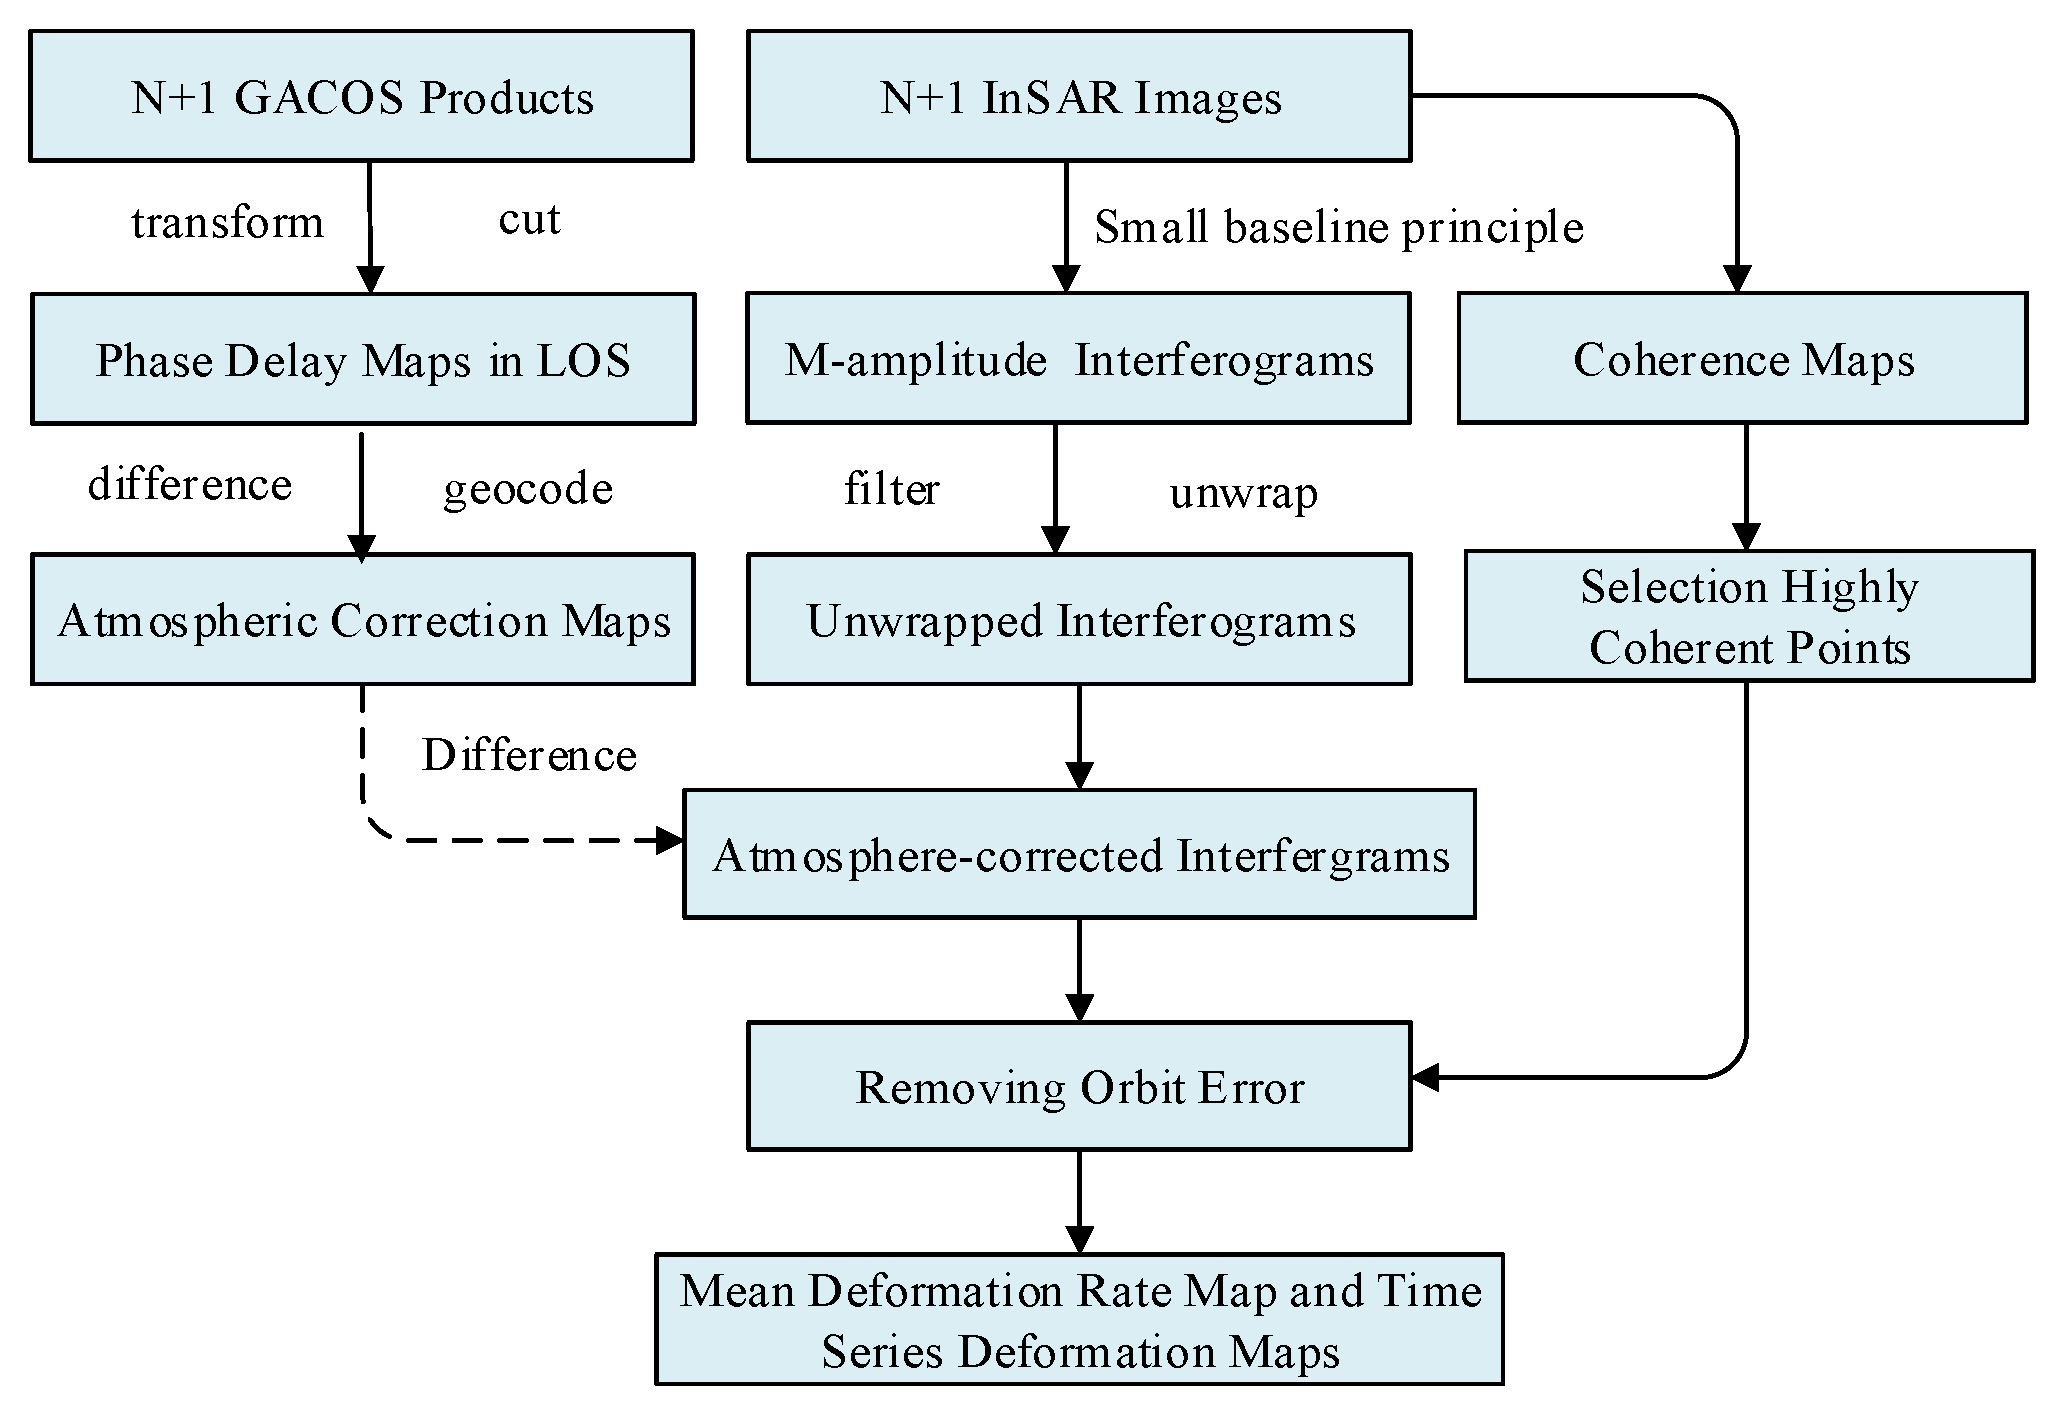 Sbcc Math Flow Chart